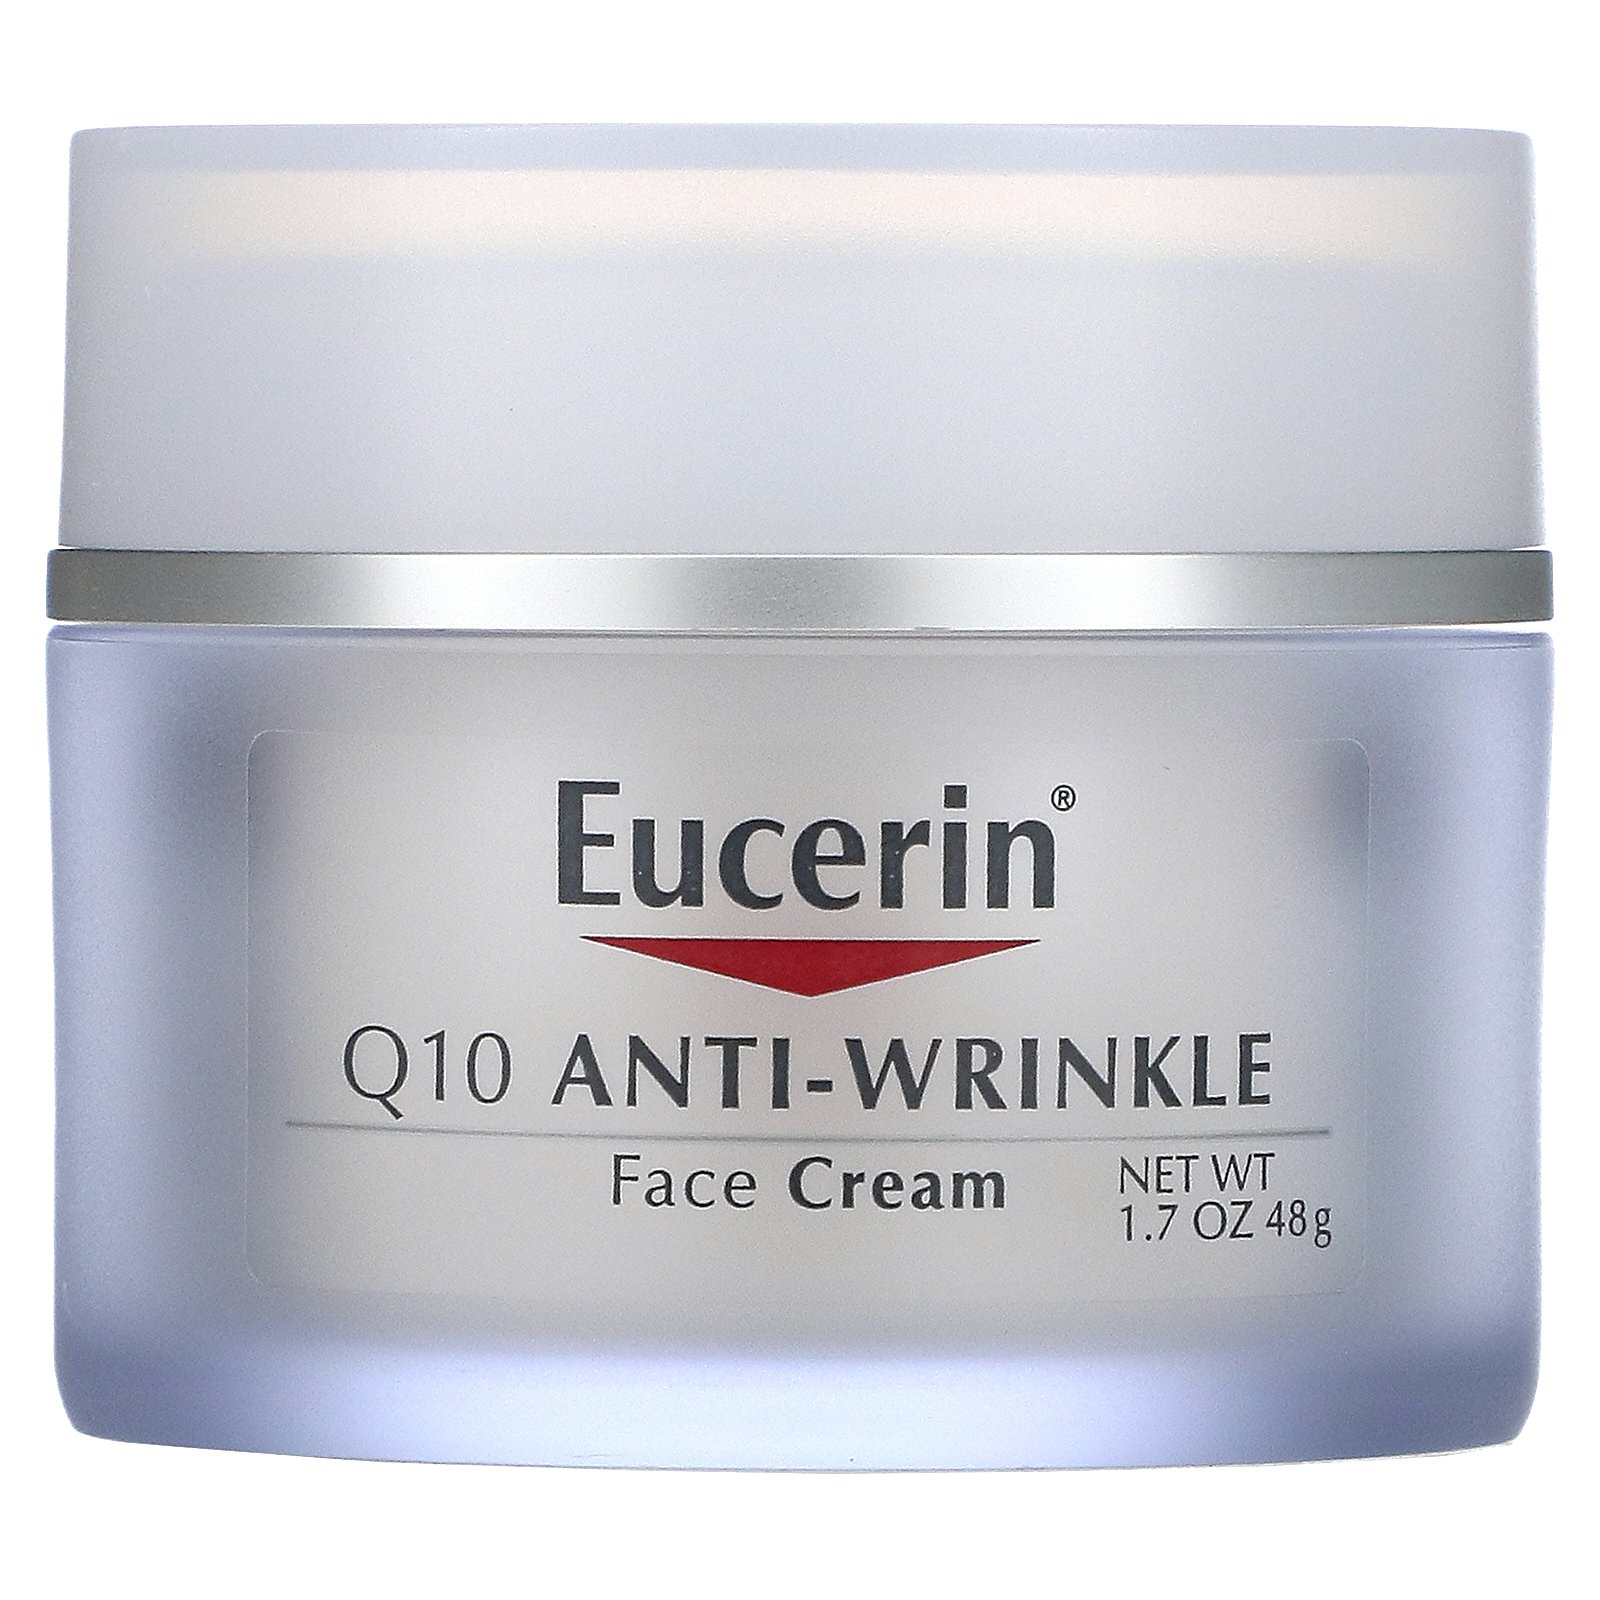 eucerin anti wrinkle face lotion)